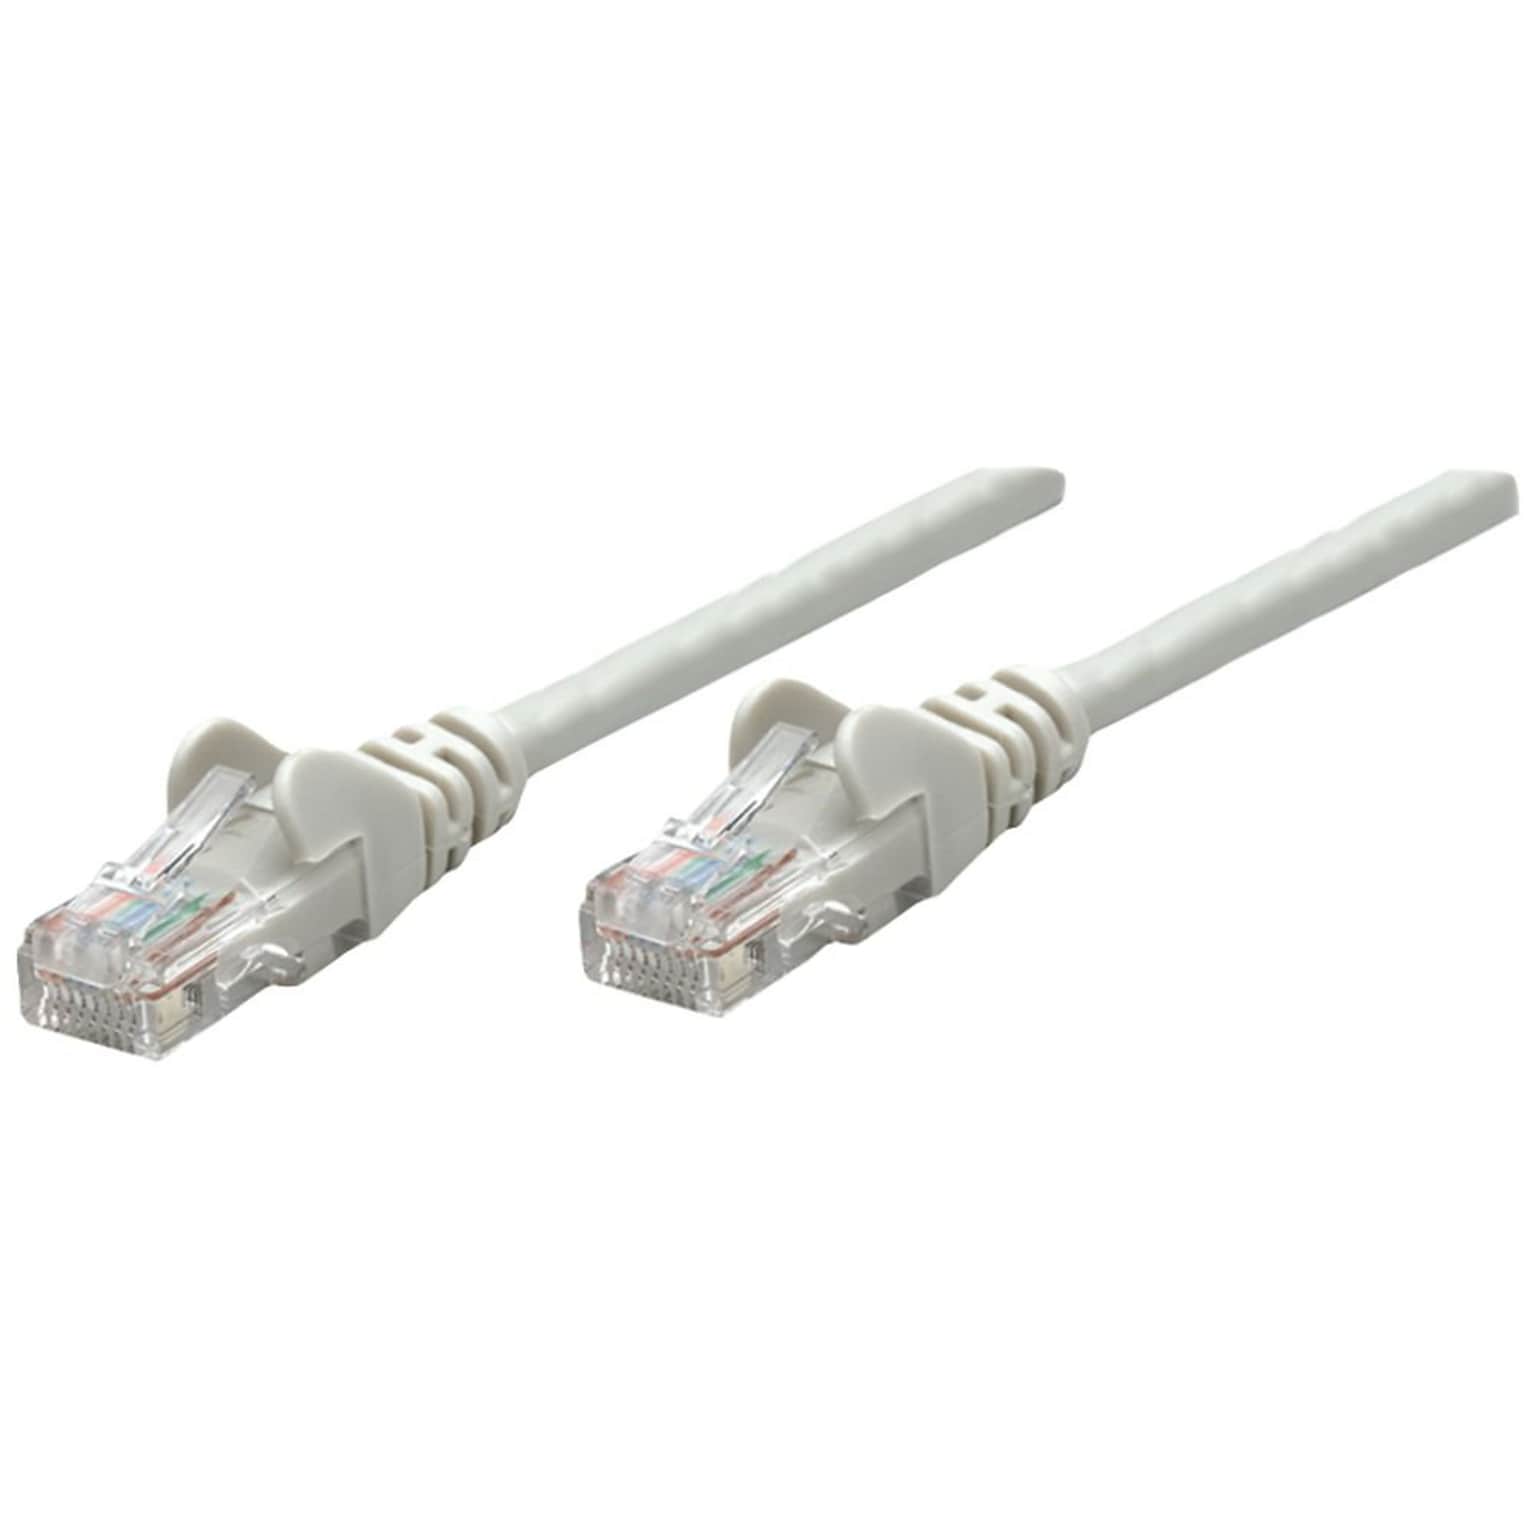 INTELLINET™ 14 Cat 5e RJ-45 UTP Network Patch Cable, Gray